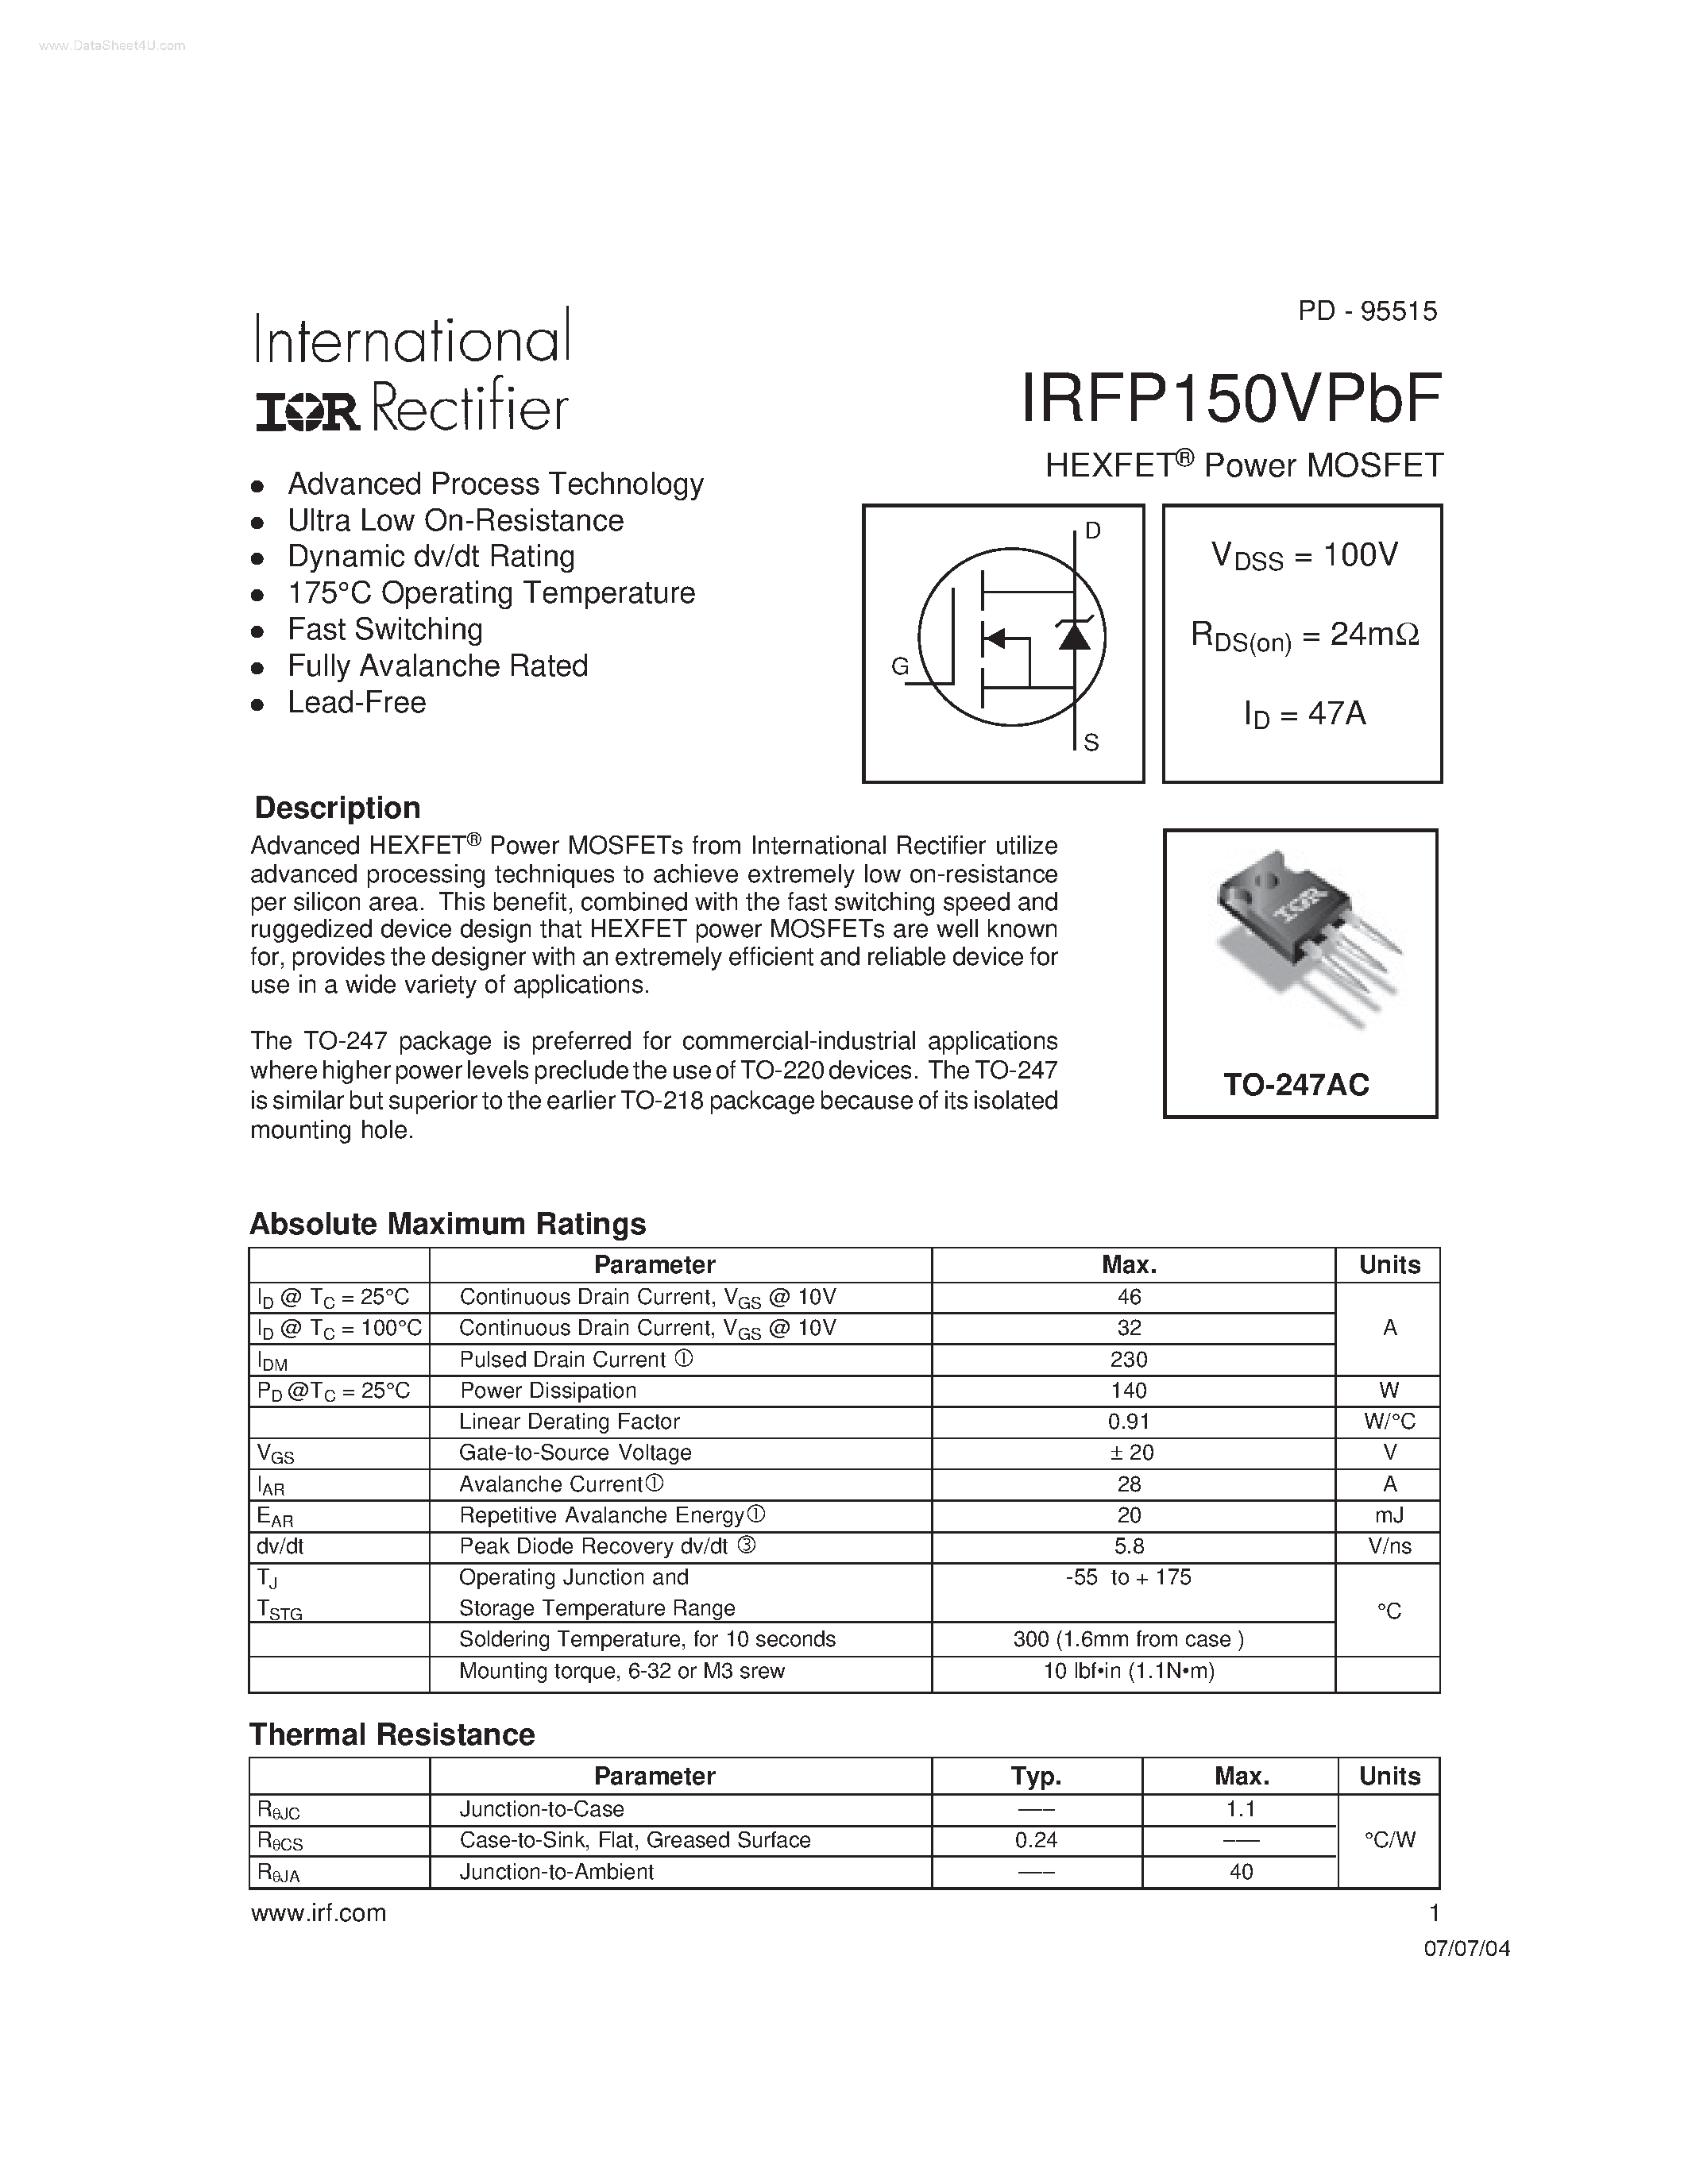 Даташит IRFP150VPBF - Power MOSFET страница 1